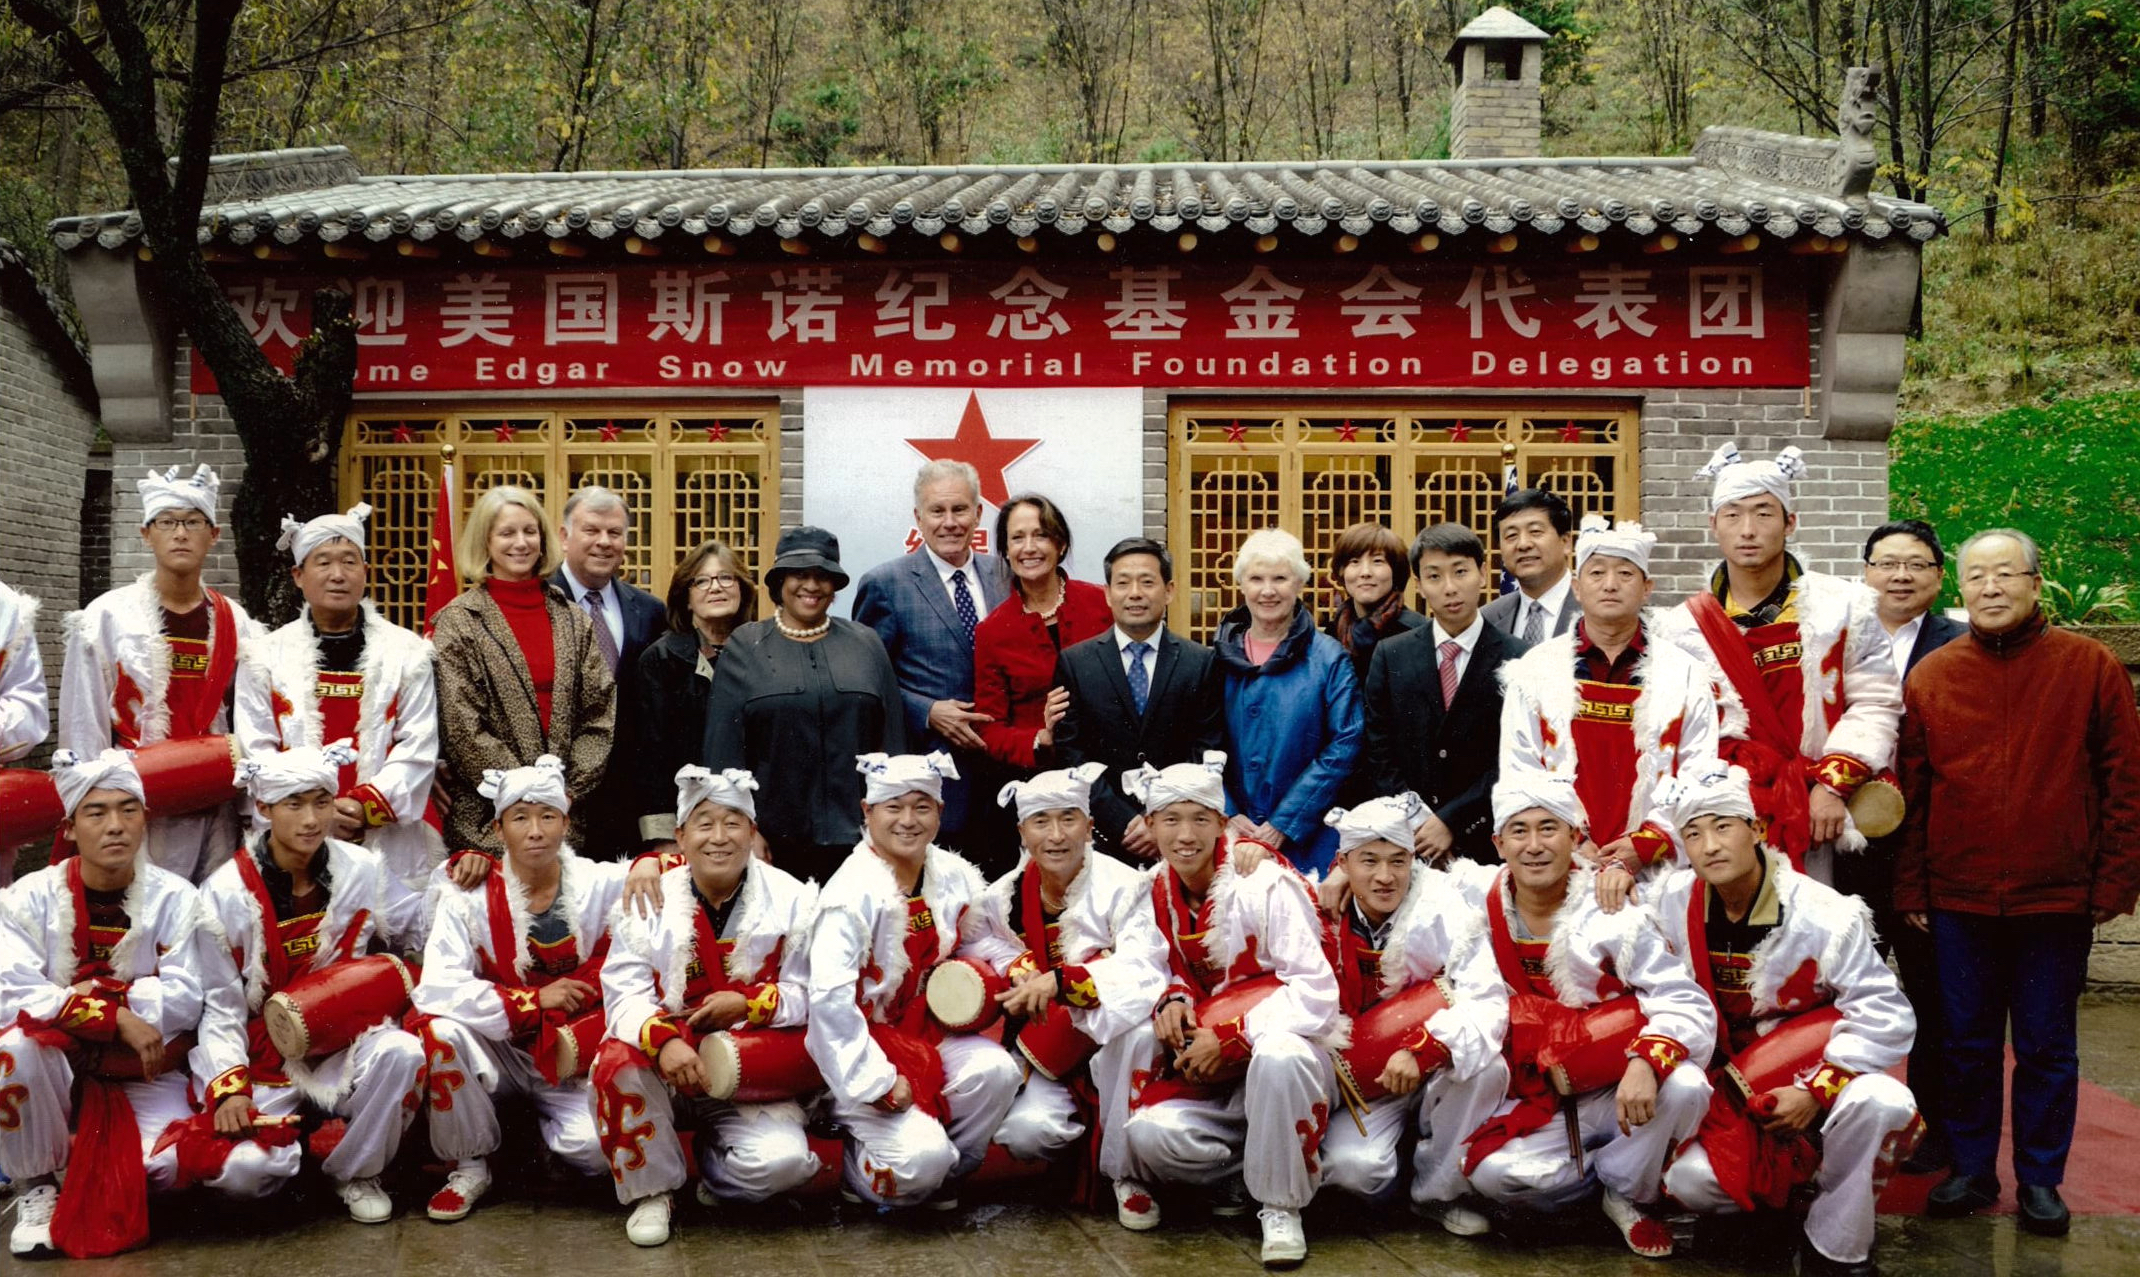 Edgar Snow foundation travel delegation in 2015 with Yanan Dancers